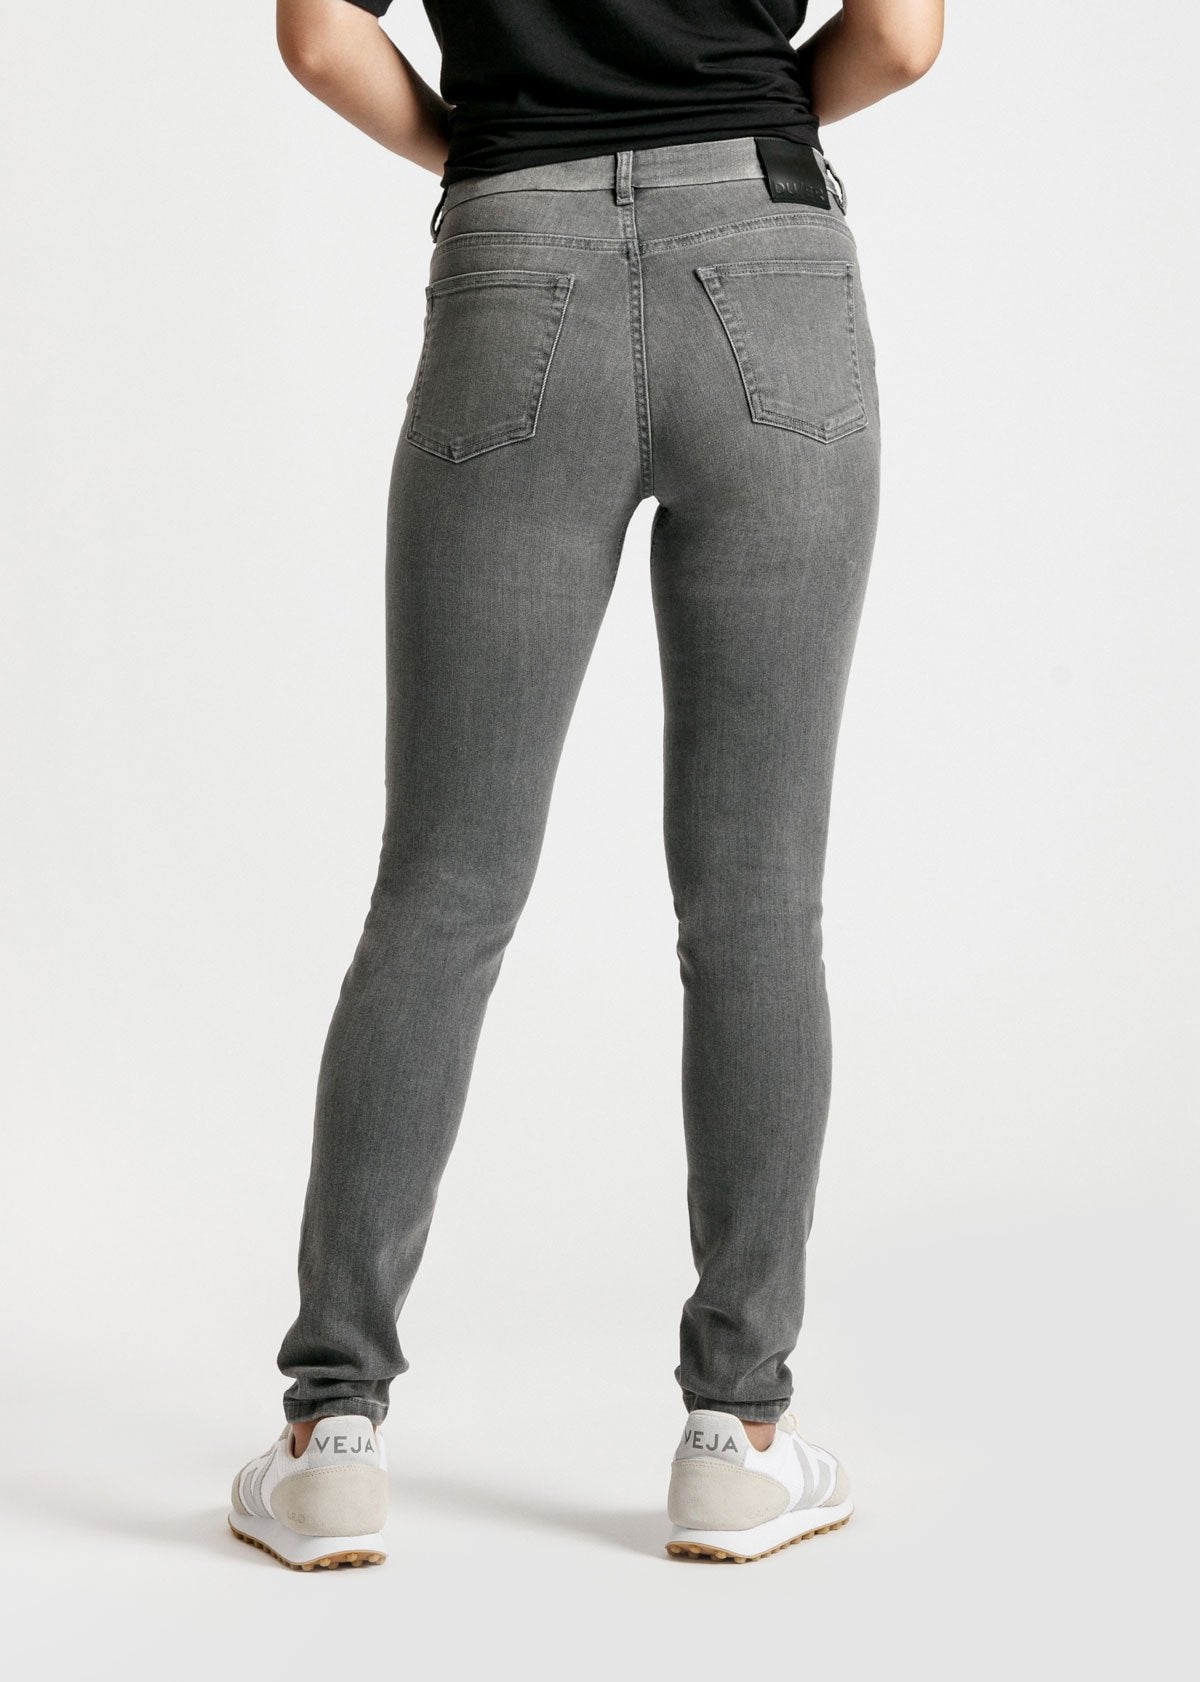 Crishtaliyo Super Skinny Women Grey Jeans - Buy Crishtaliyo Super Skinny Women  Grey Jeans Online at Best Prices in India | Flipkart.com